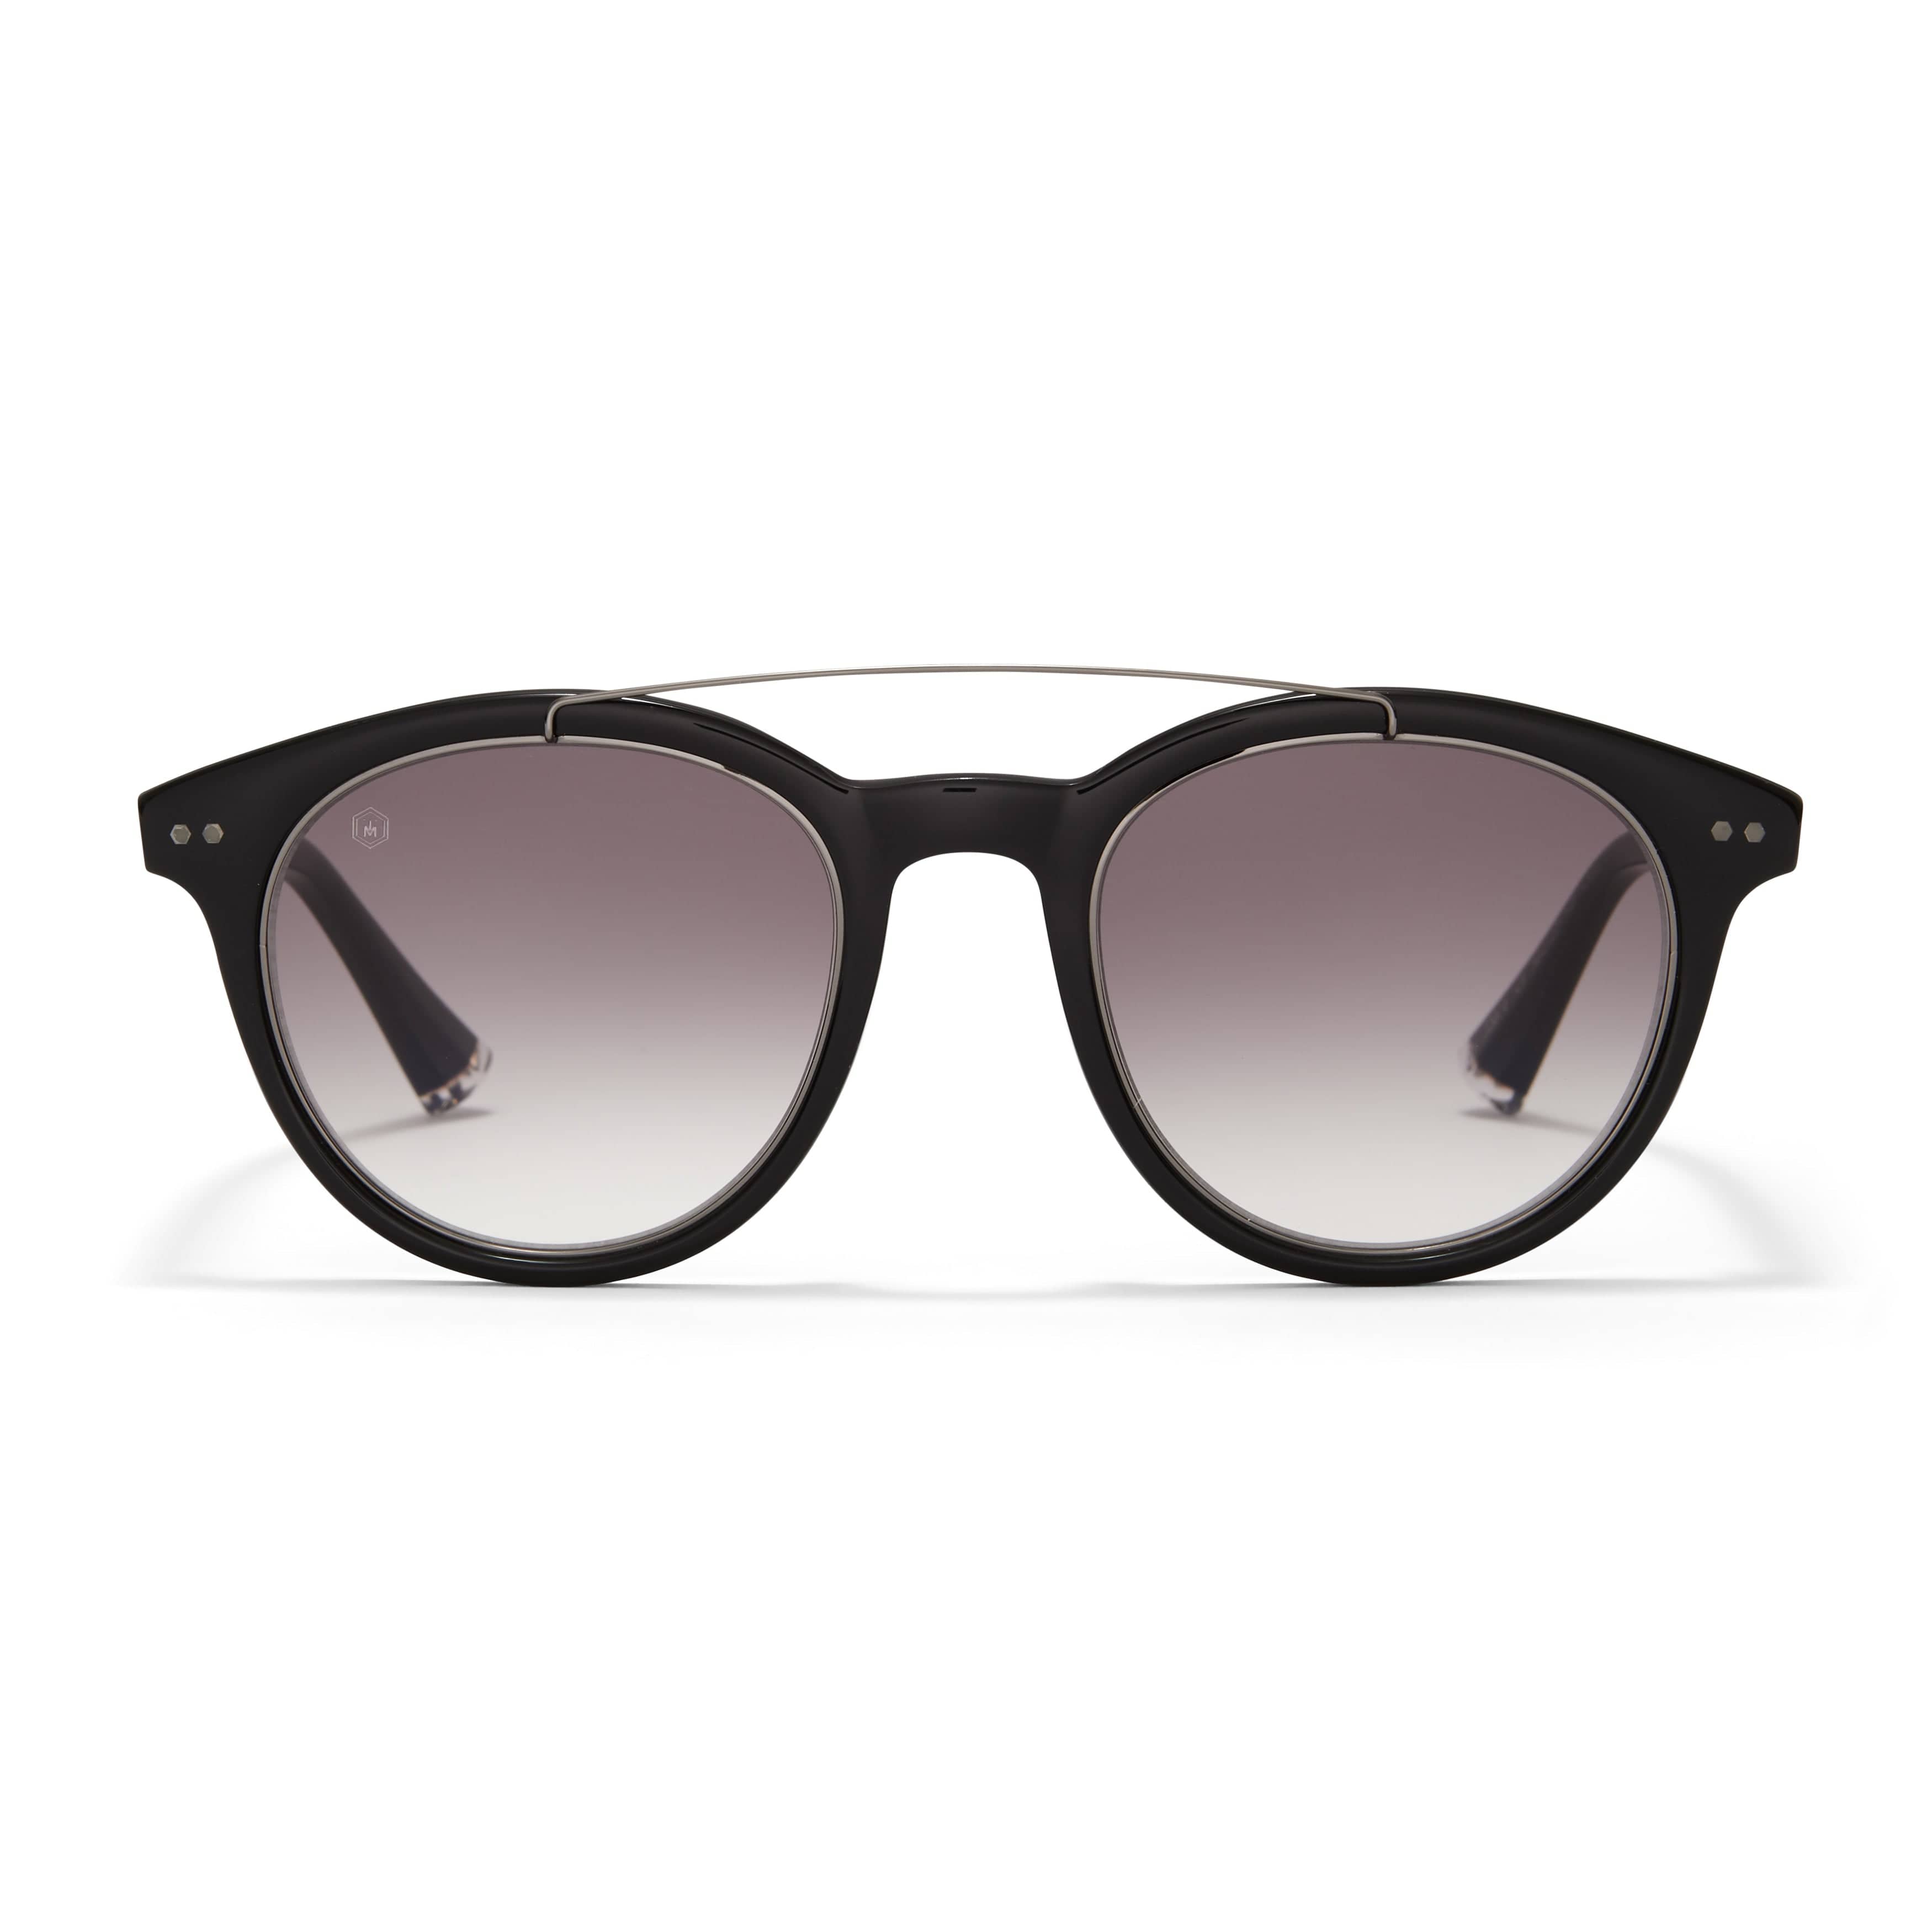 Blenheim Sunglasses